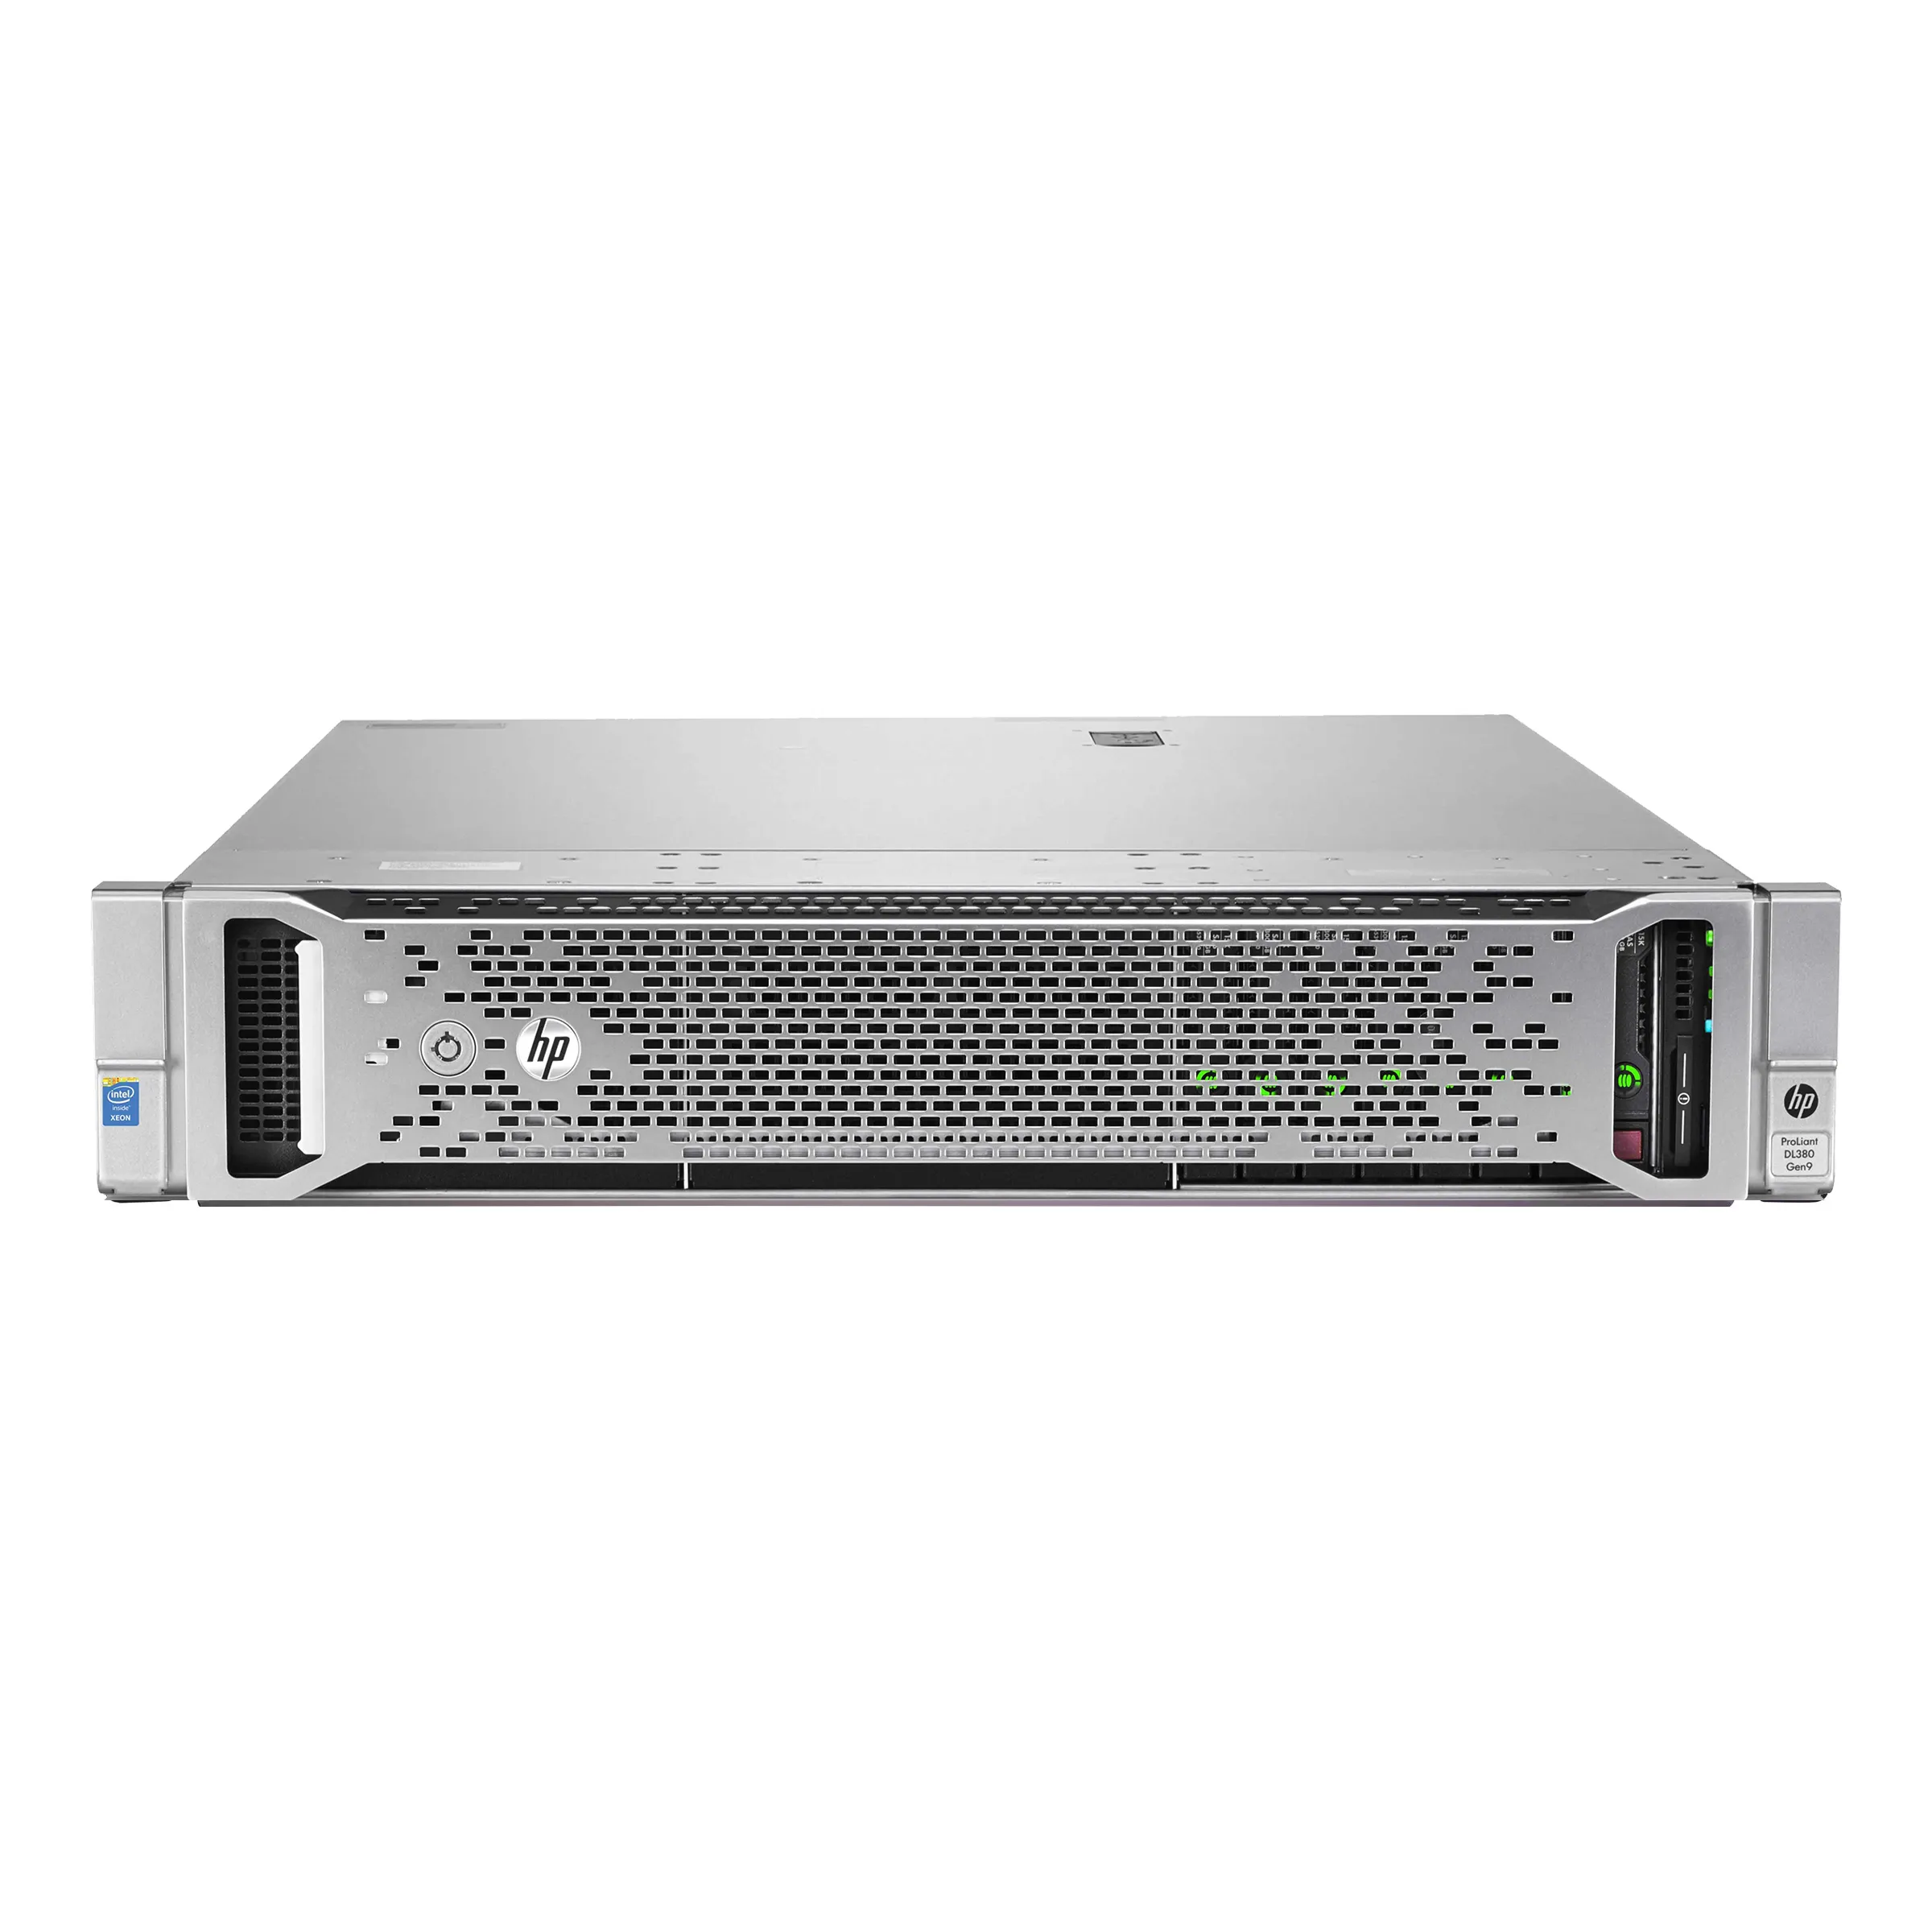 HPE ProLiant DL380 Gen9 2U Rack Server